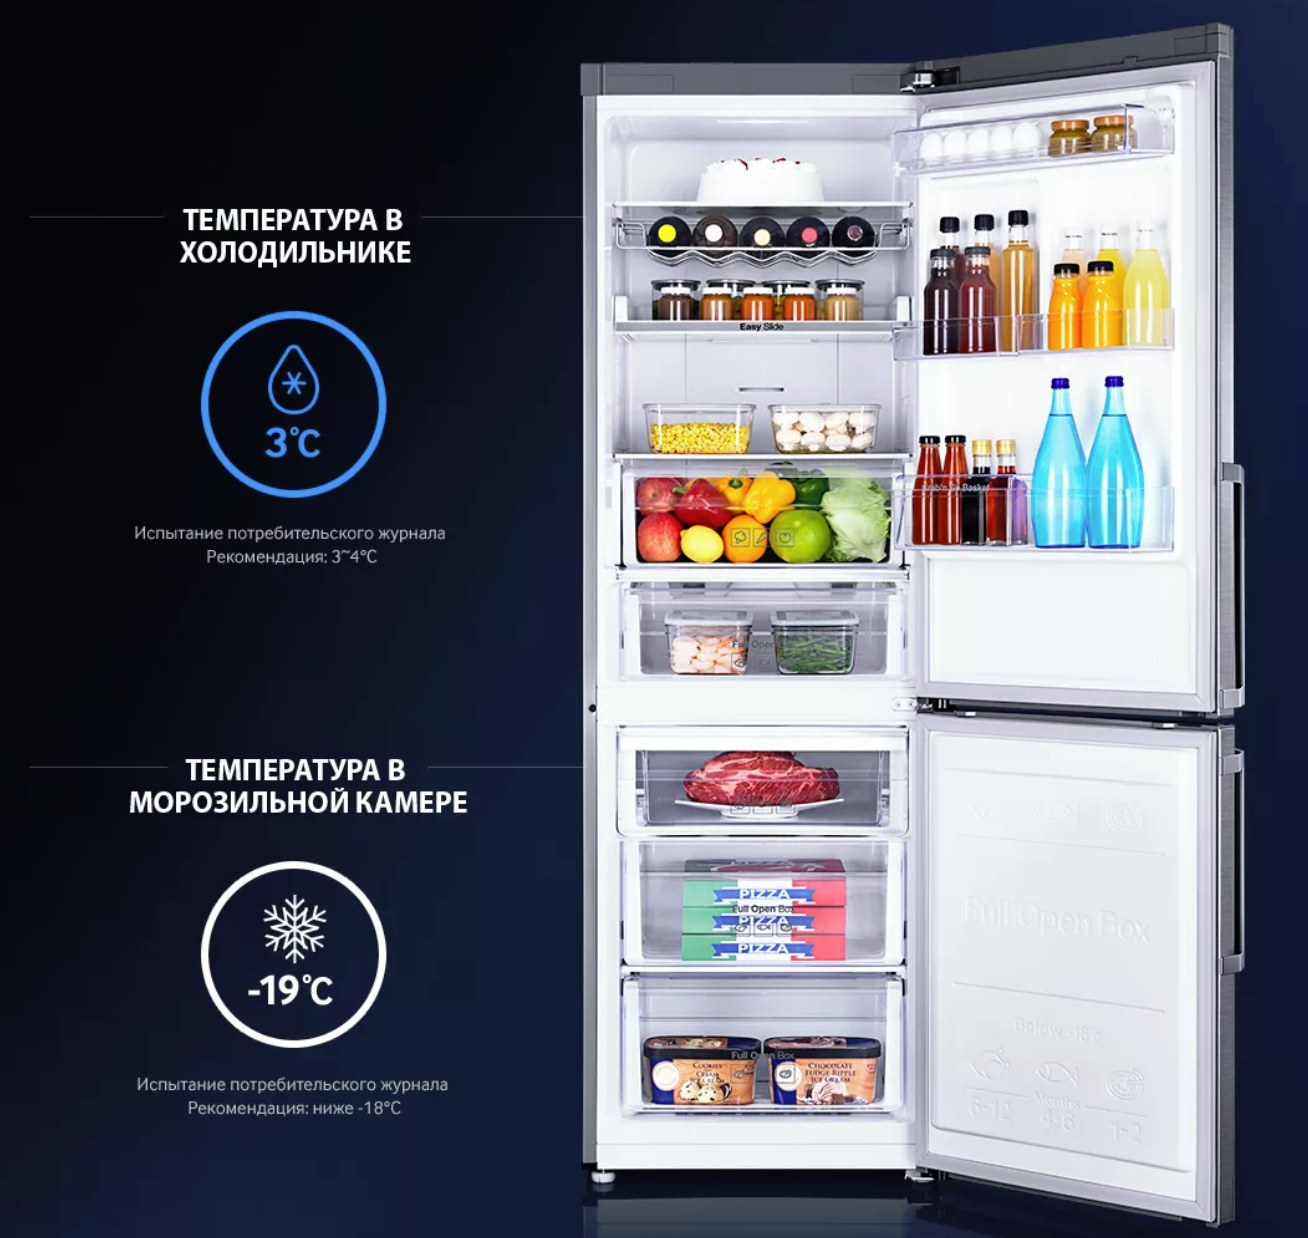 Температура холодильника 280 к. Холодильник самсунг двухкамерный градусы. Оптимальная температура в холодильнике самсунг. Температура в холодоль. Ьемпертврца в холодильнике.